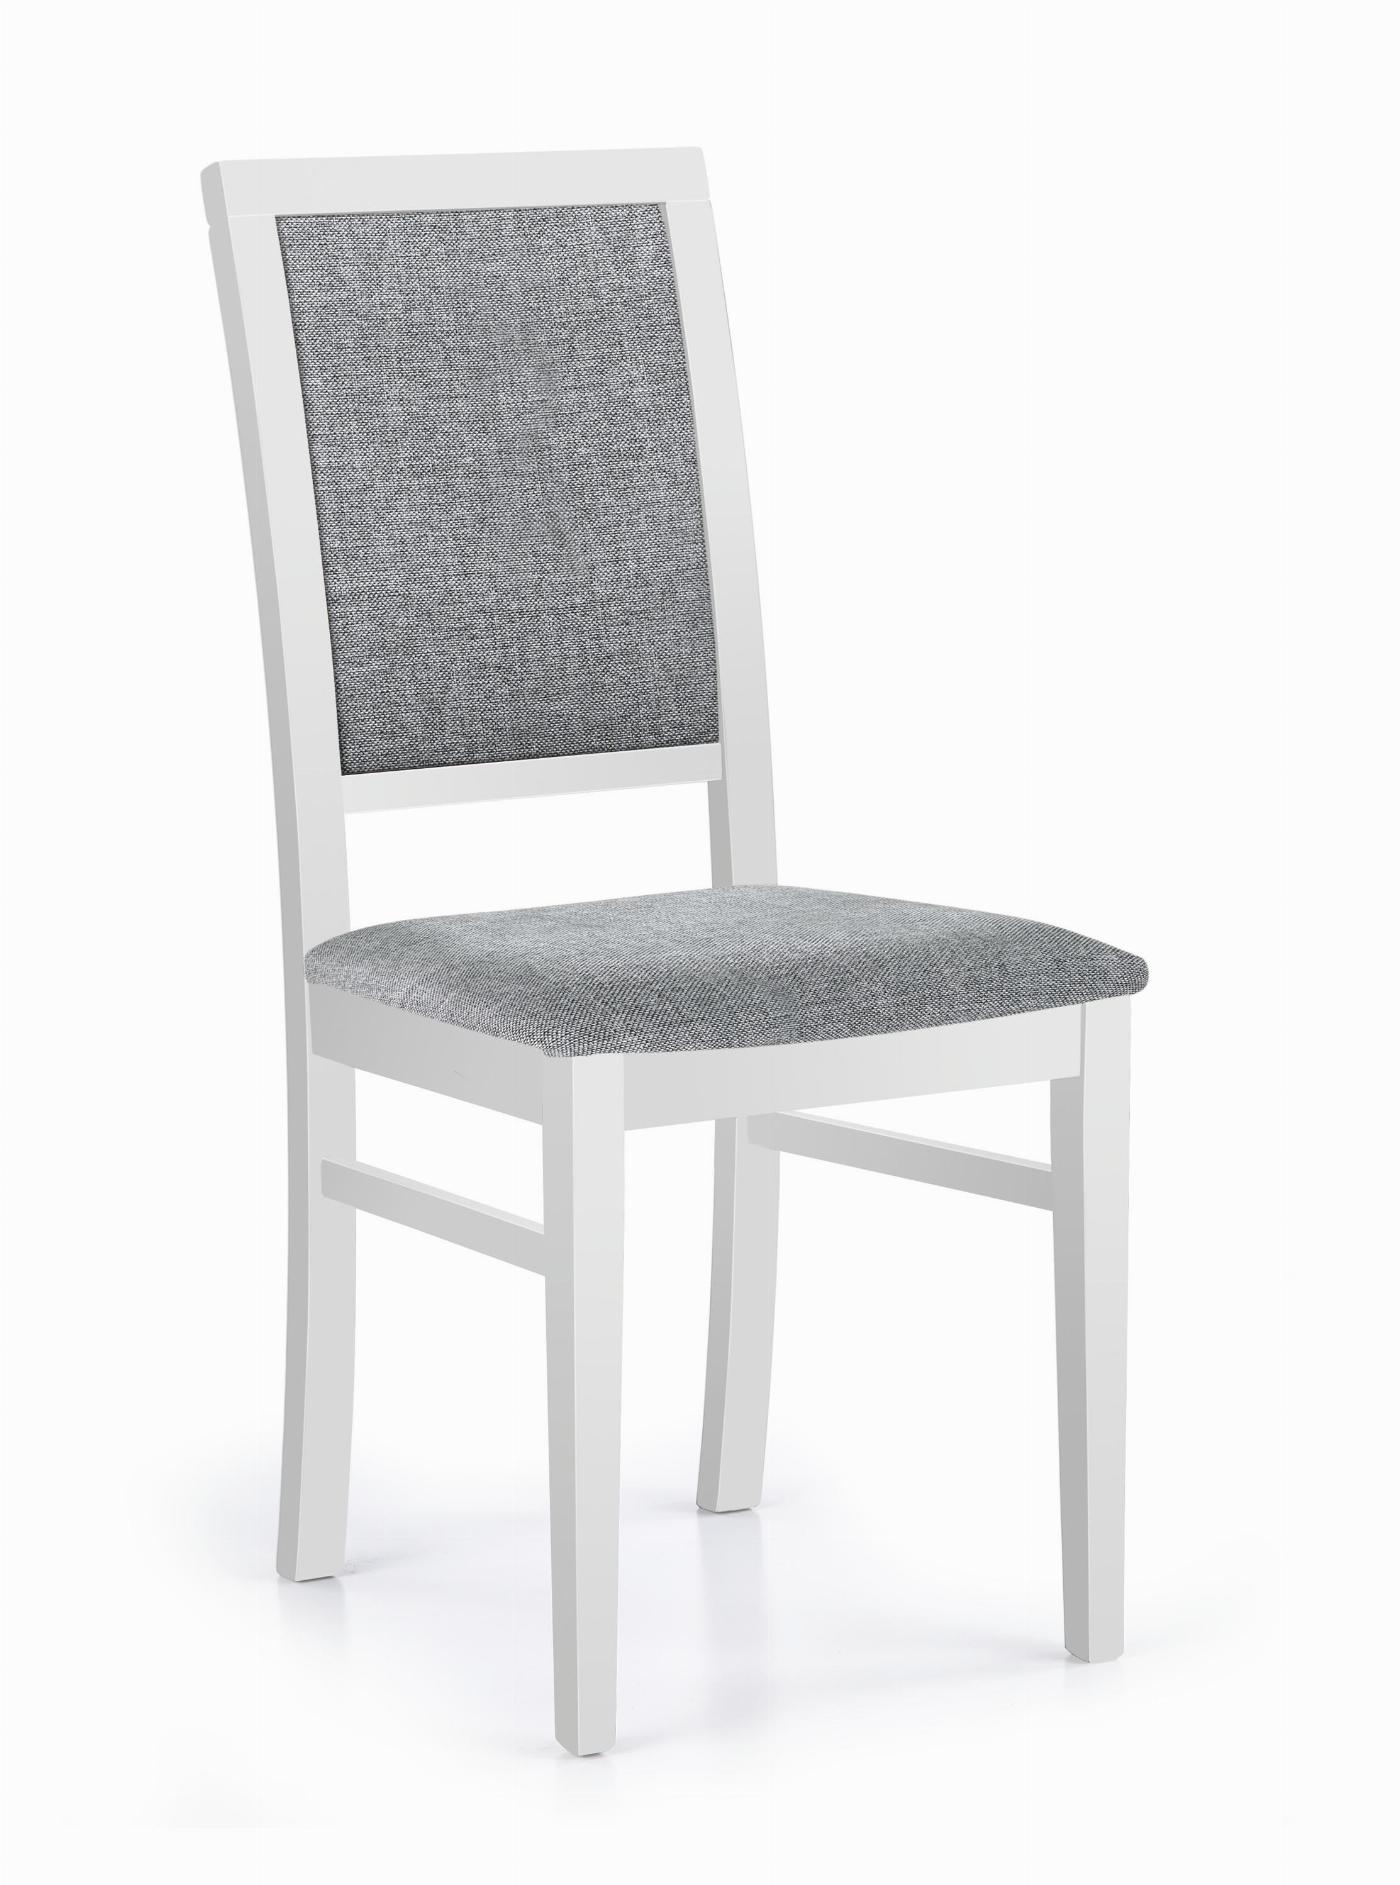 SYLWEK1 krzesło biały / tap: Inari 91 (1p=2szt)